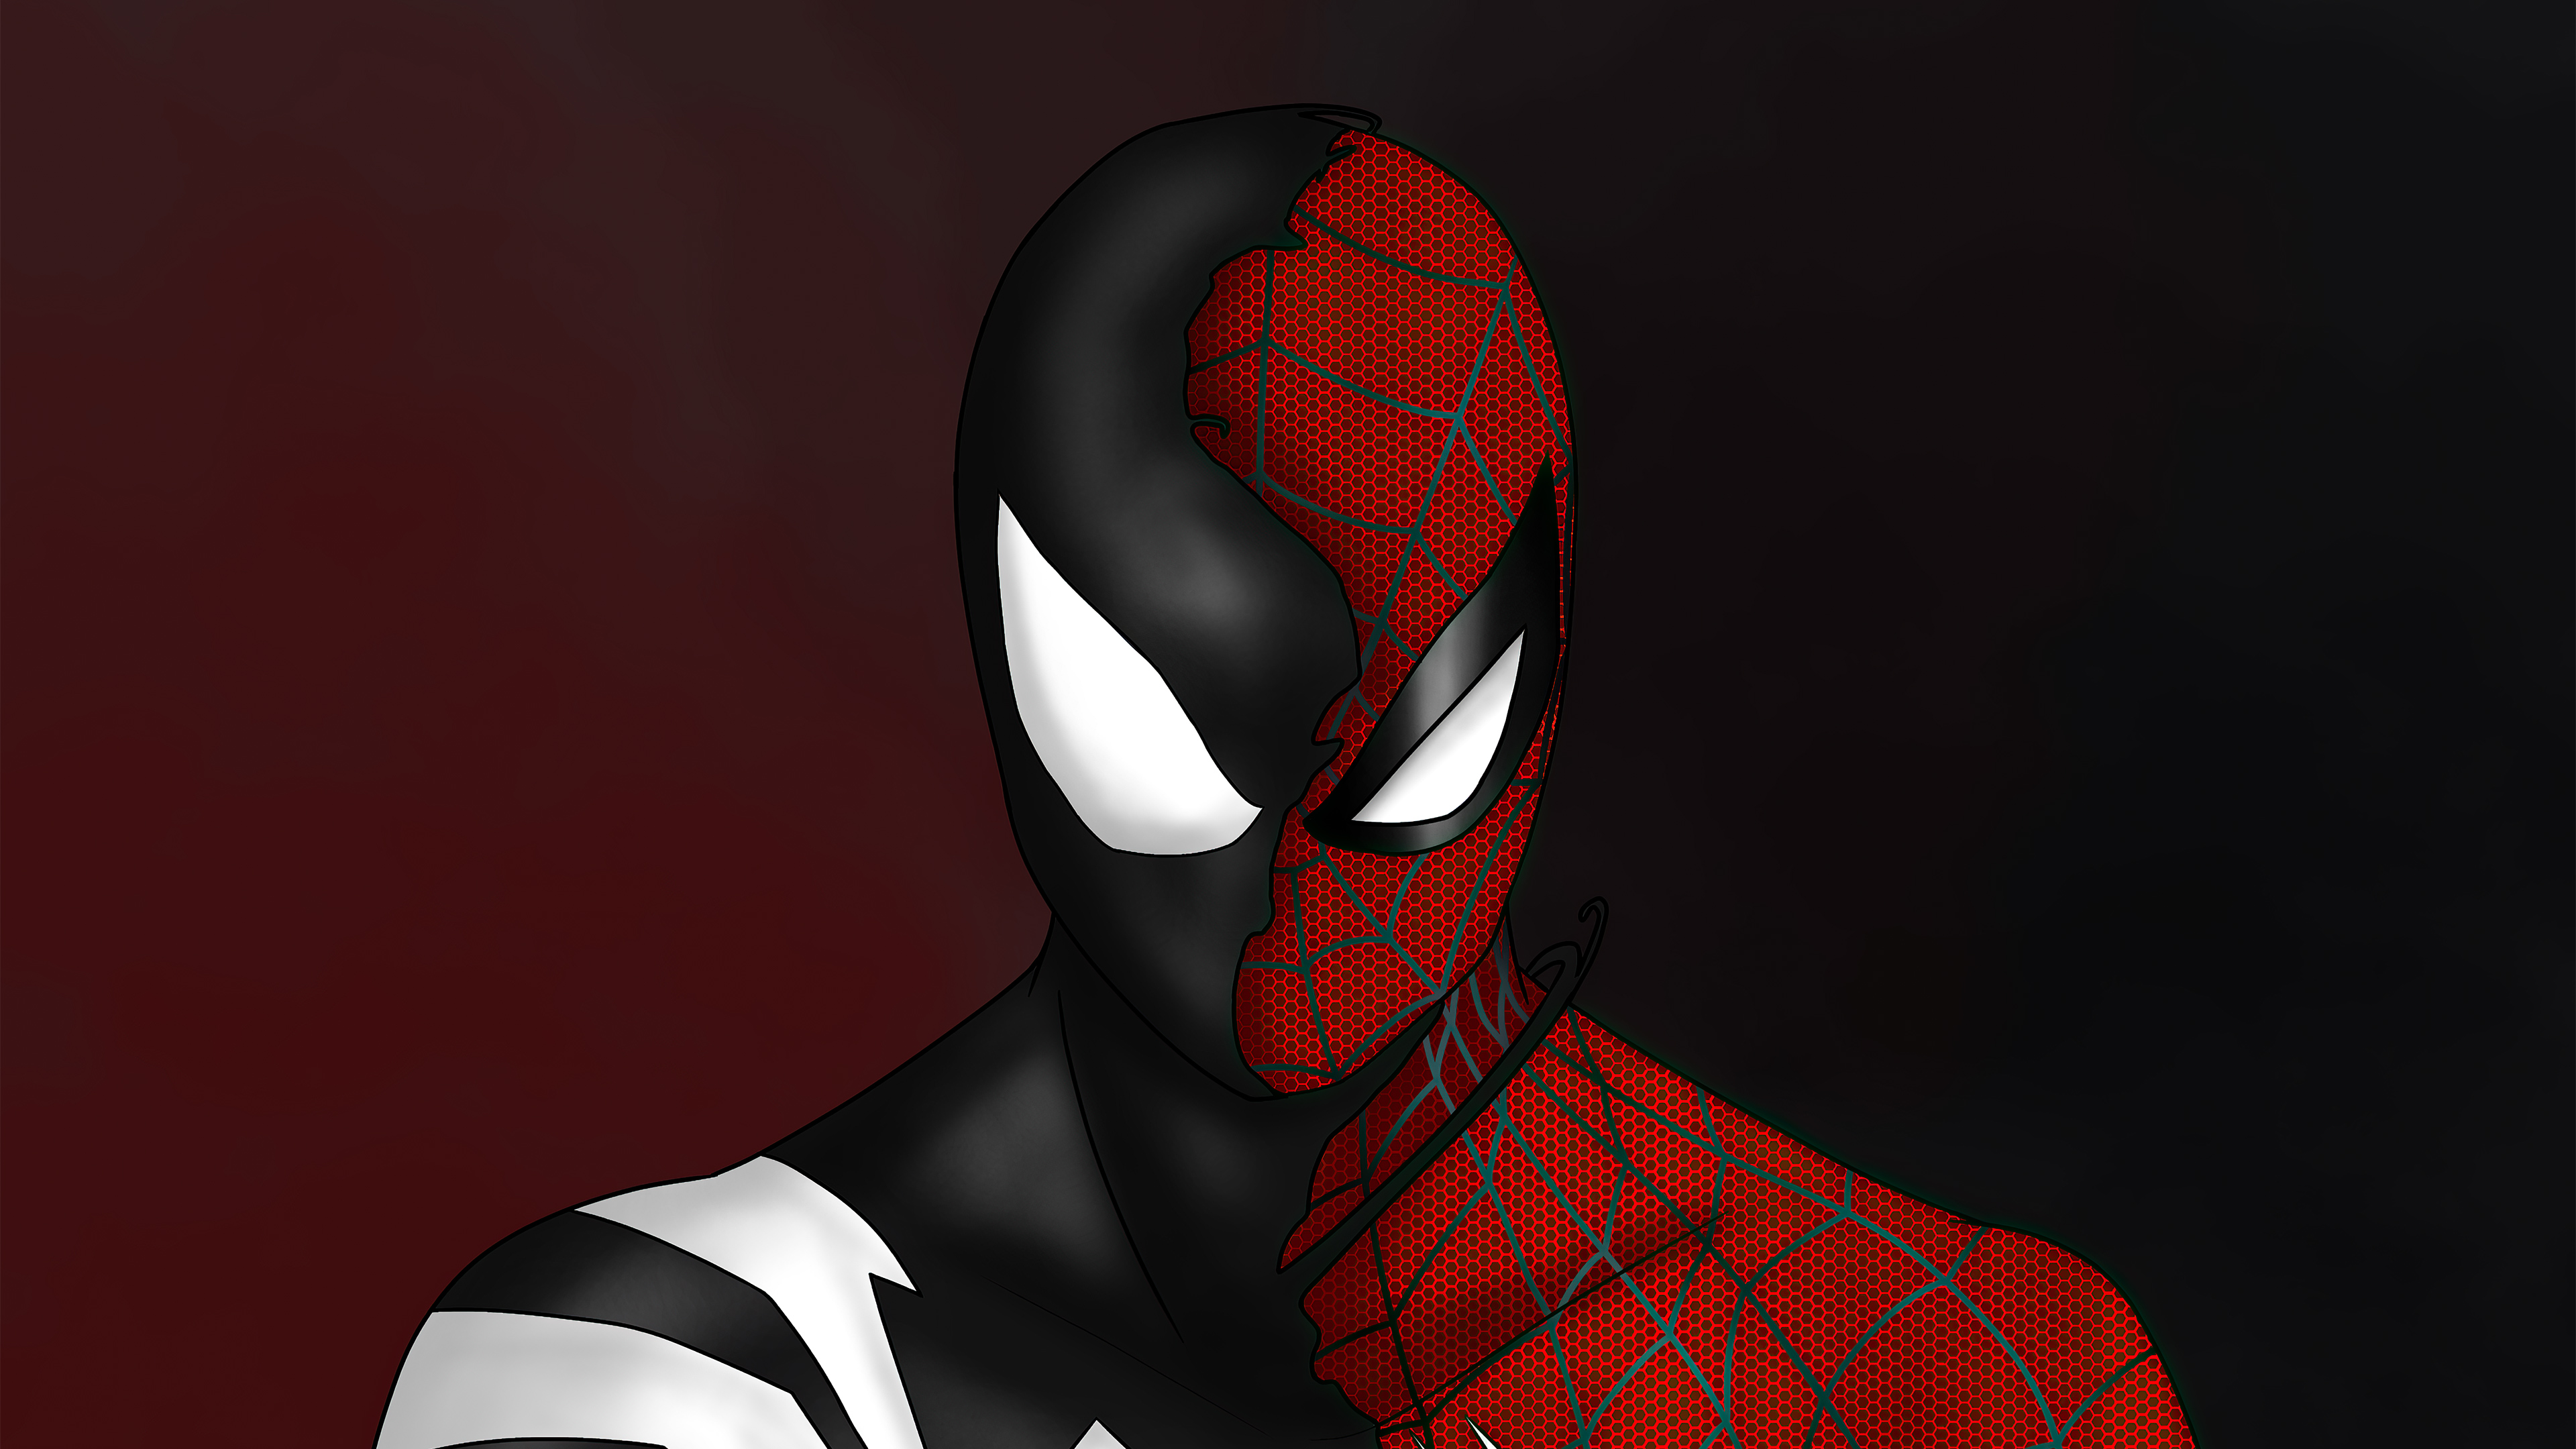 spider man custom symbiote red suit split 4k 1602452348 - Spider Man Custom Symbiote Red Suit Split 4k - Spider Man Custom Symbiote Red Suit Split 4k wallpapers